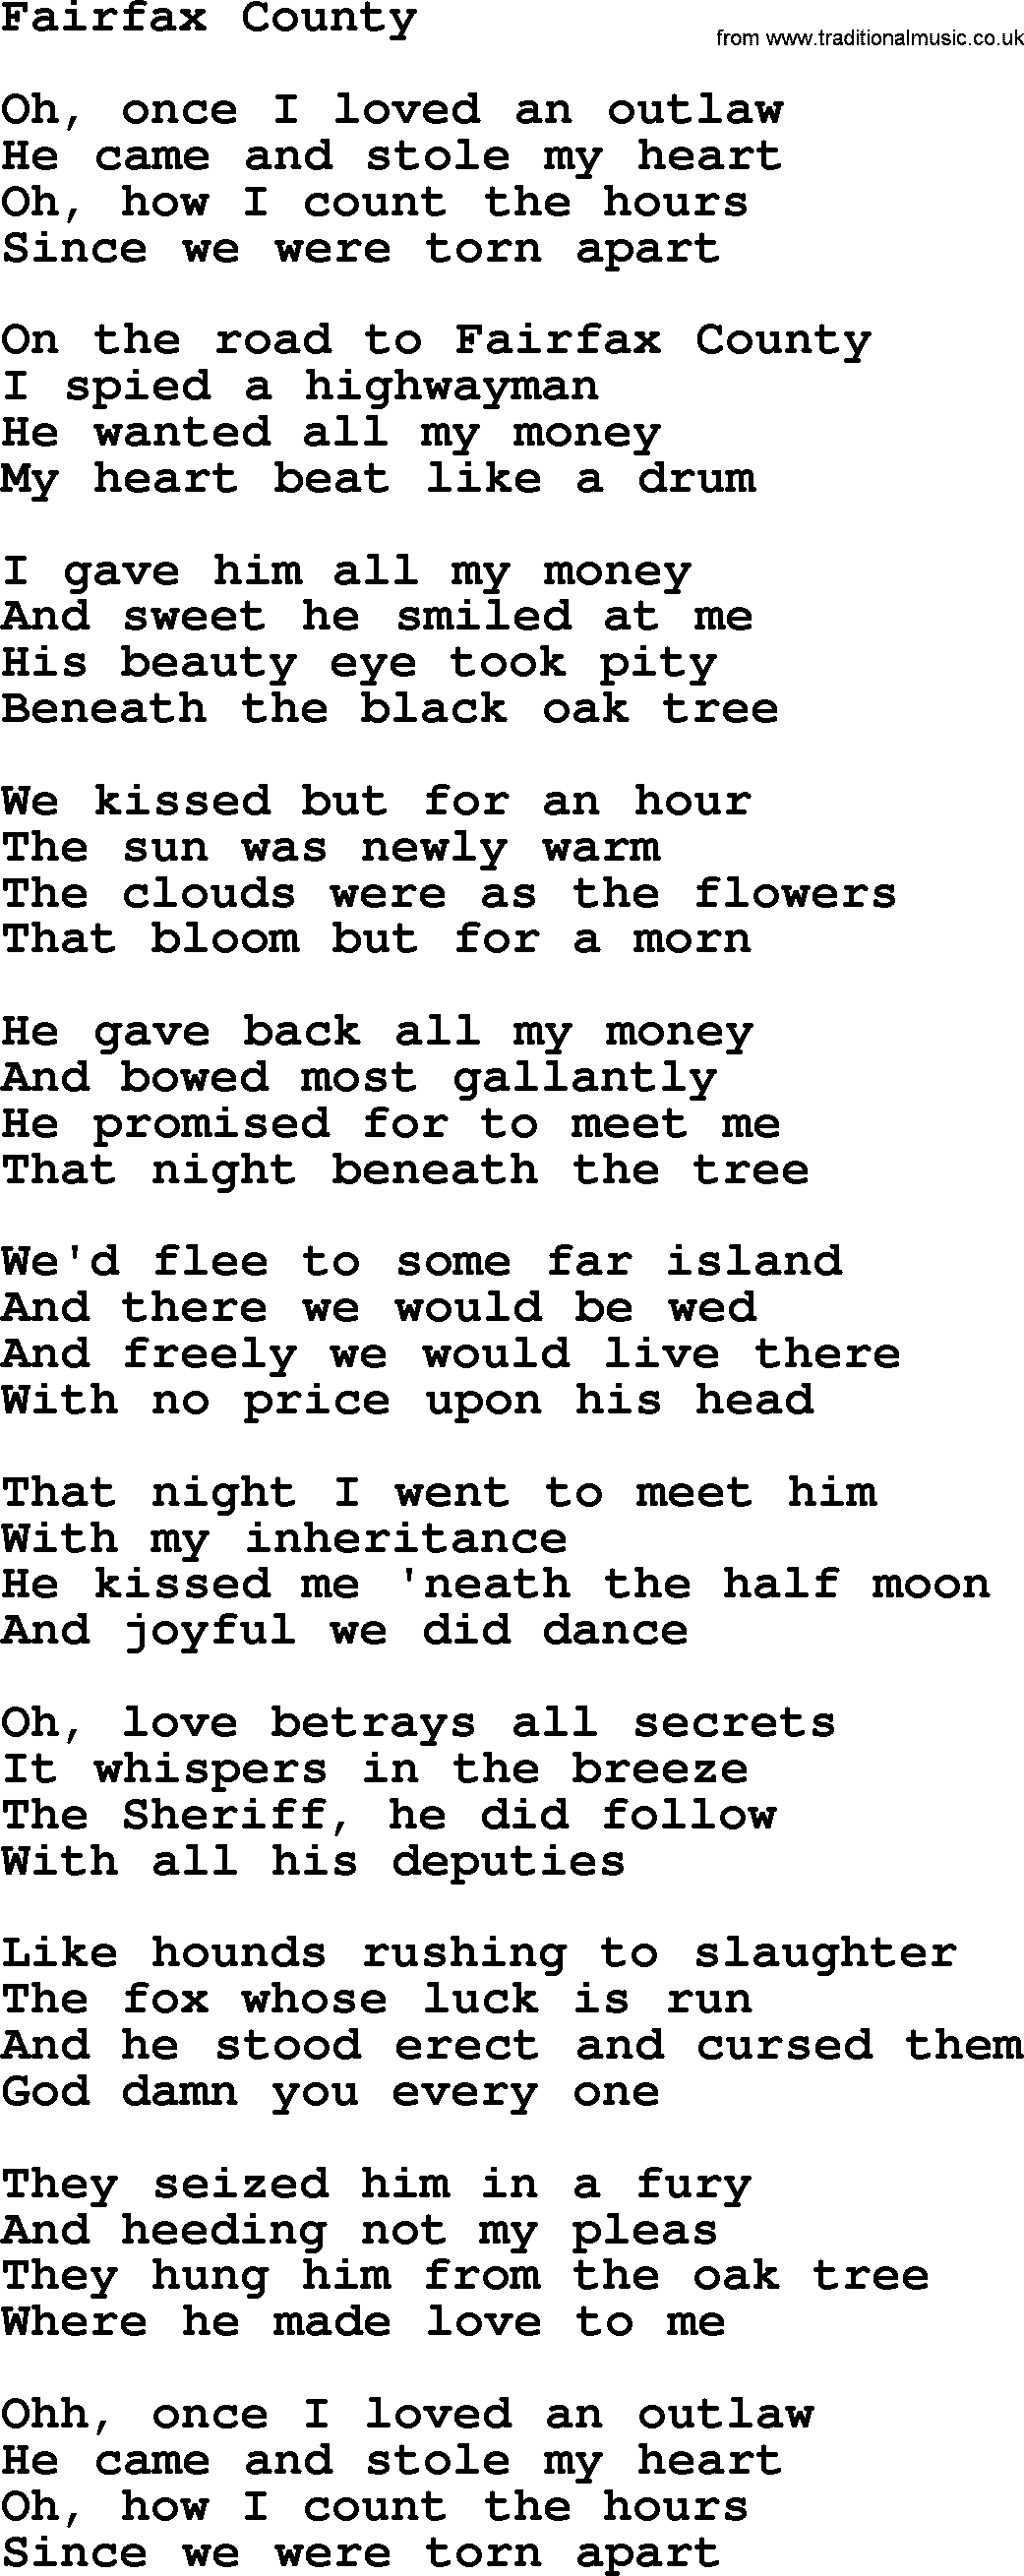 Joan Baez song Fairfax County, lyrics